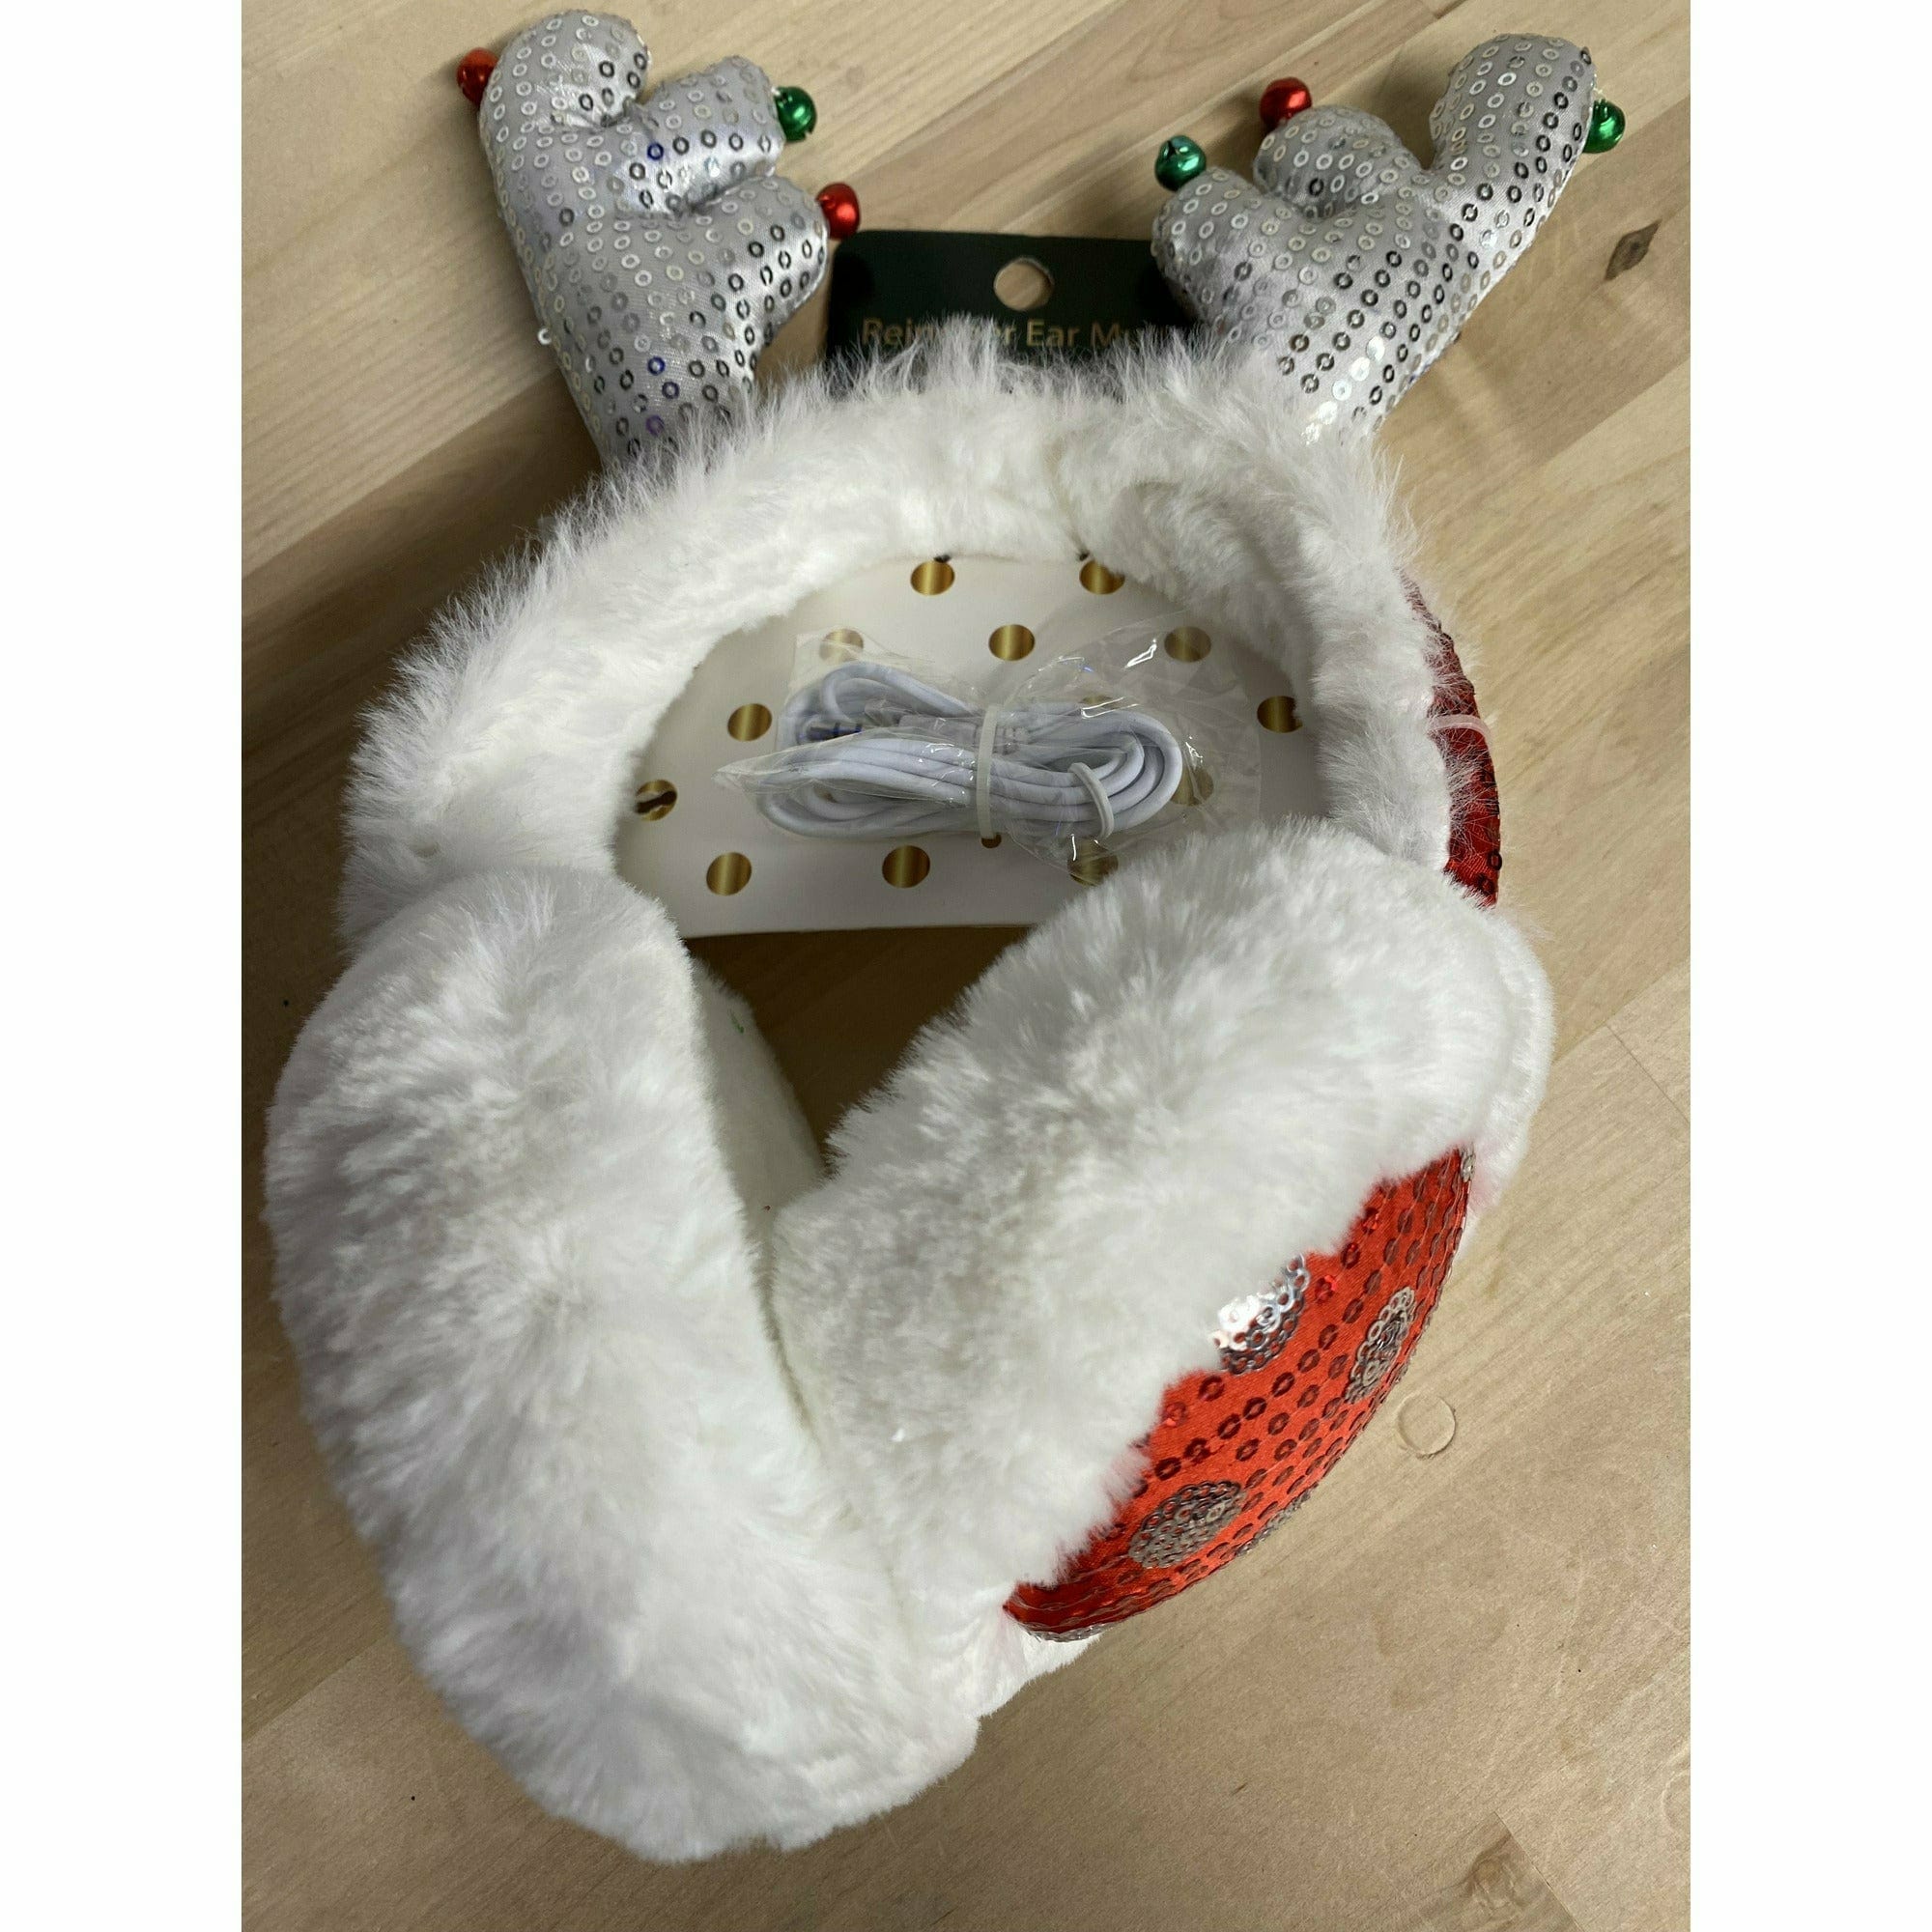 Almar Sales HOLIDAY: CHRISTMAS Reindeer Ear Muffs with Headphones